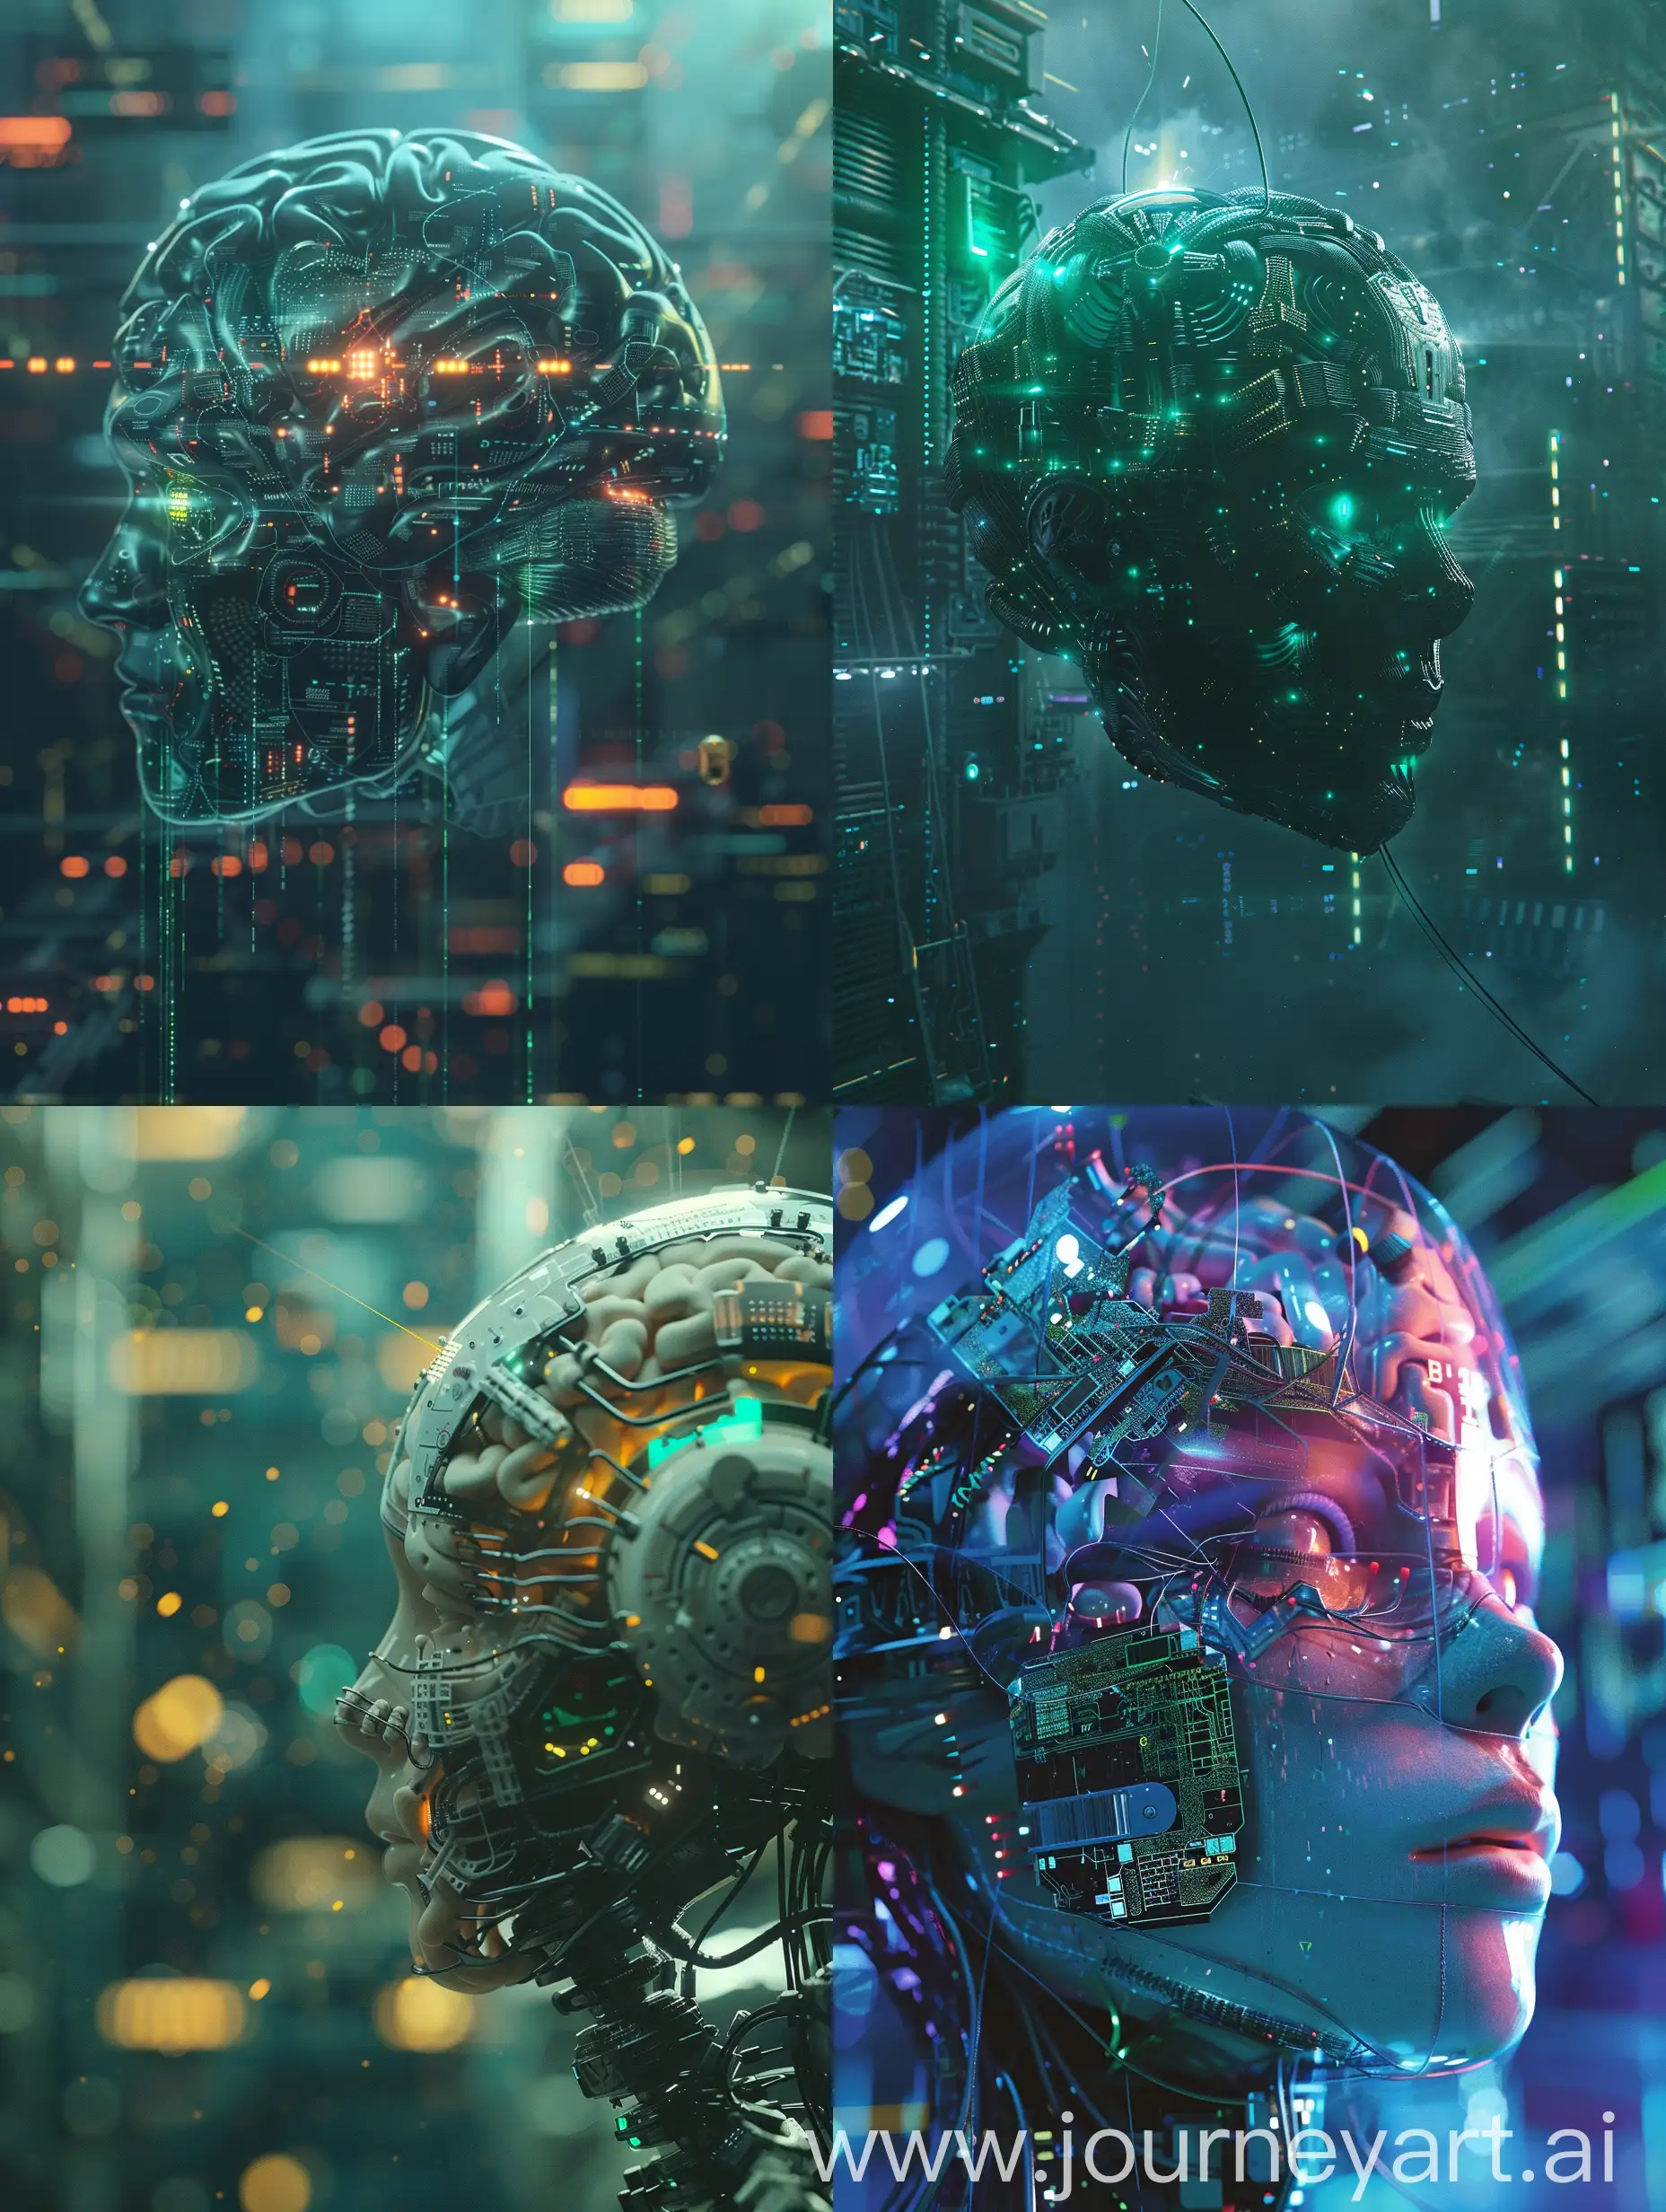 Virtual machine brain, cyberpunk, futuristic technology